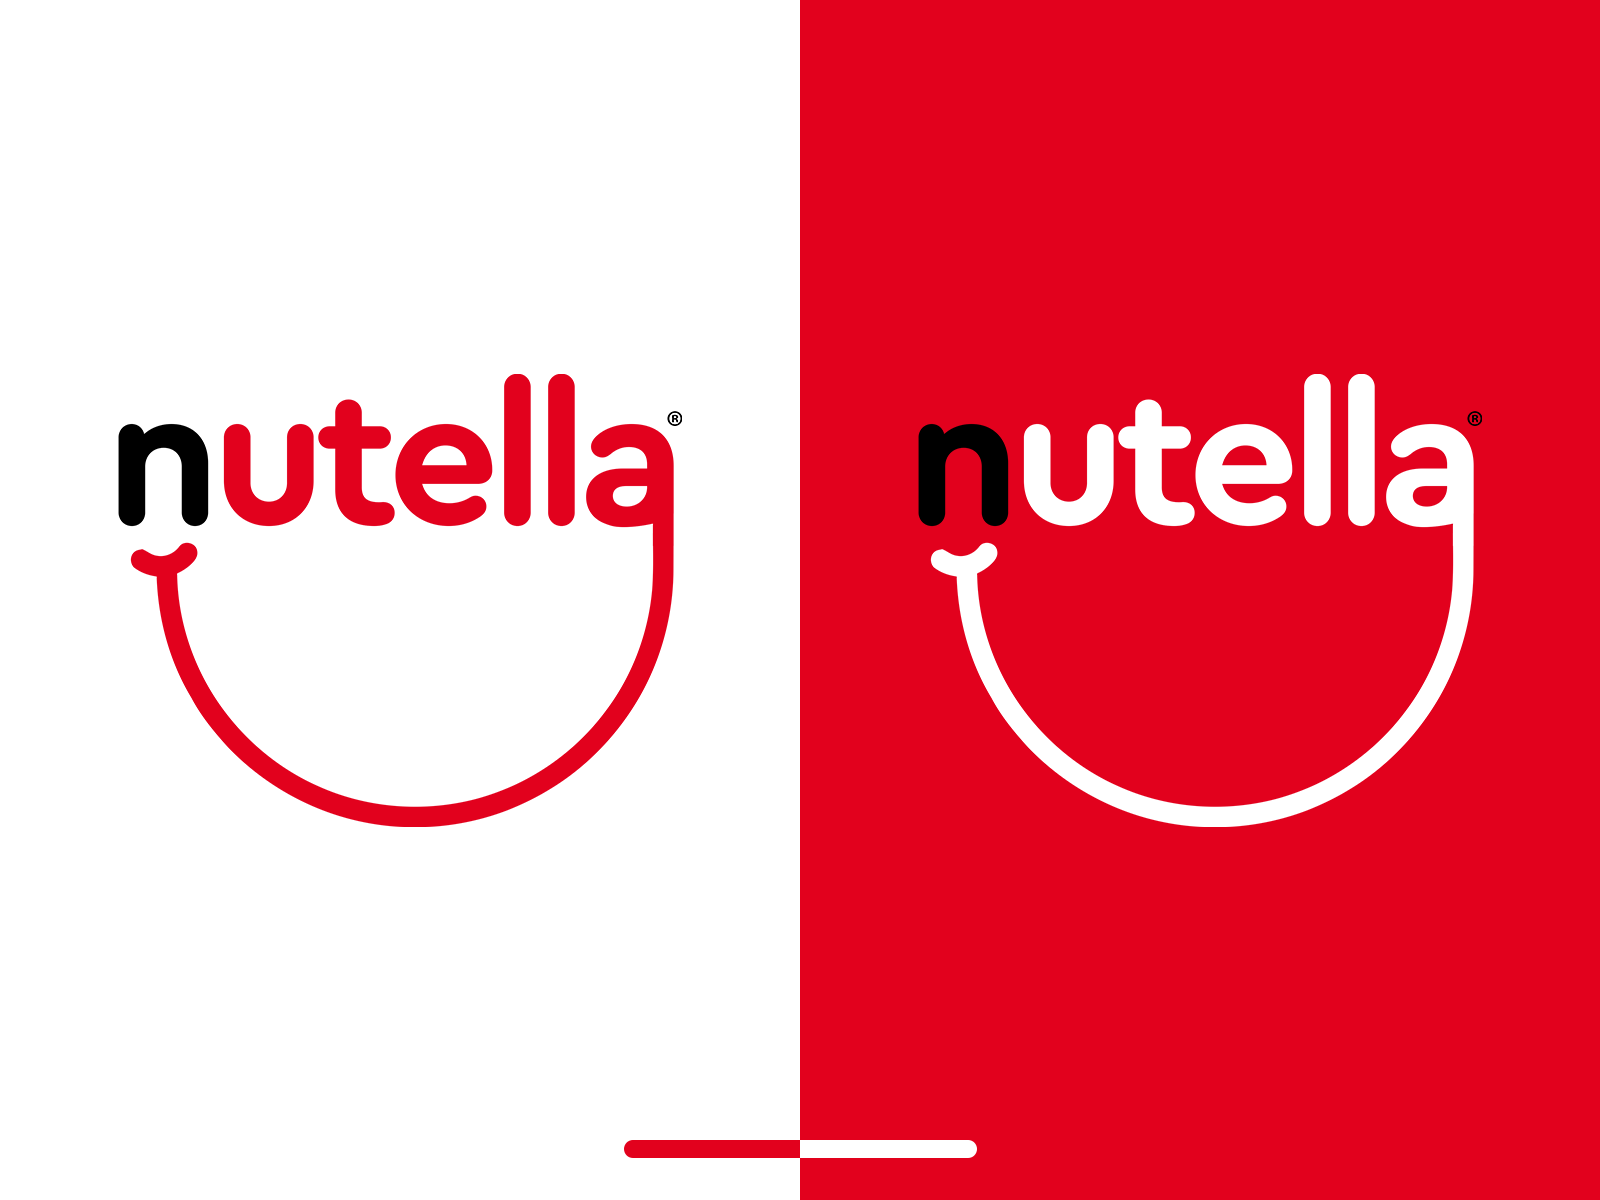 Nutella Re Branding By Clirim Gashi On Dribbble